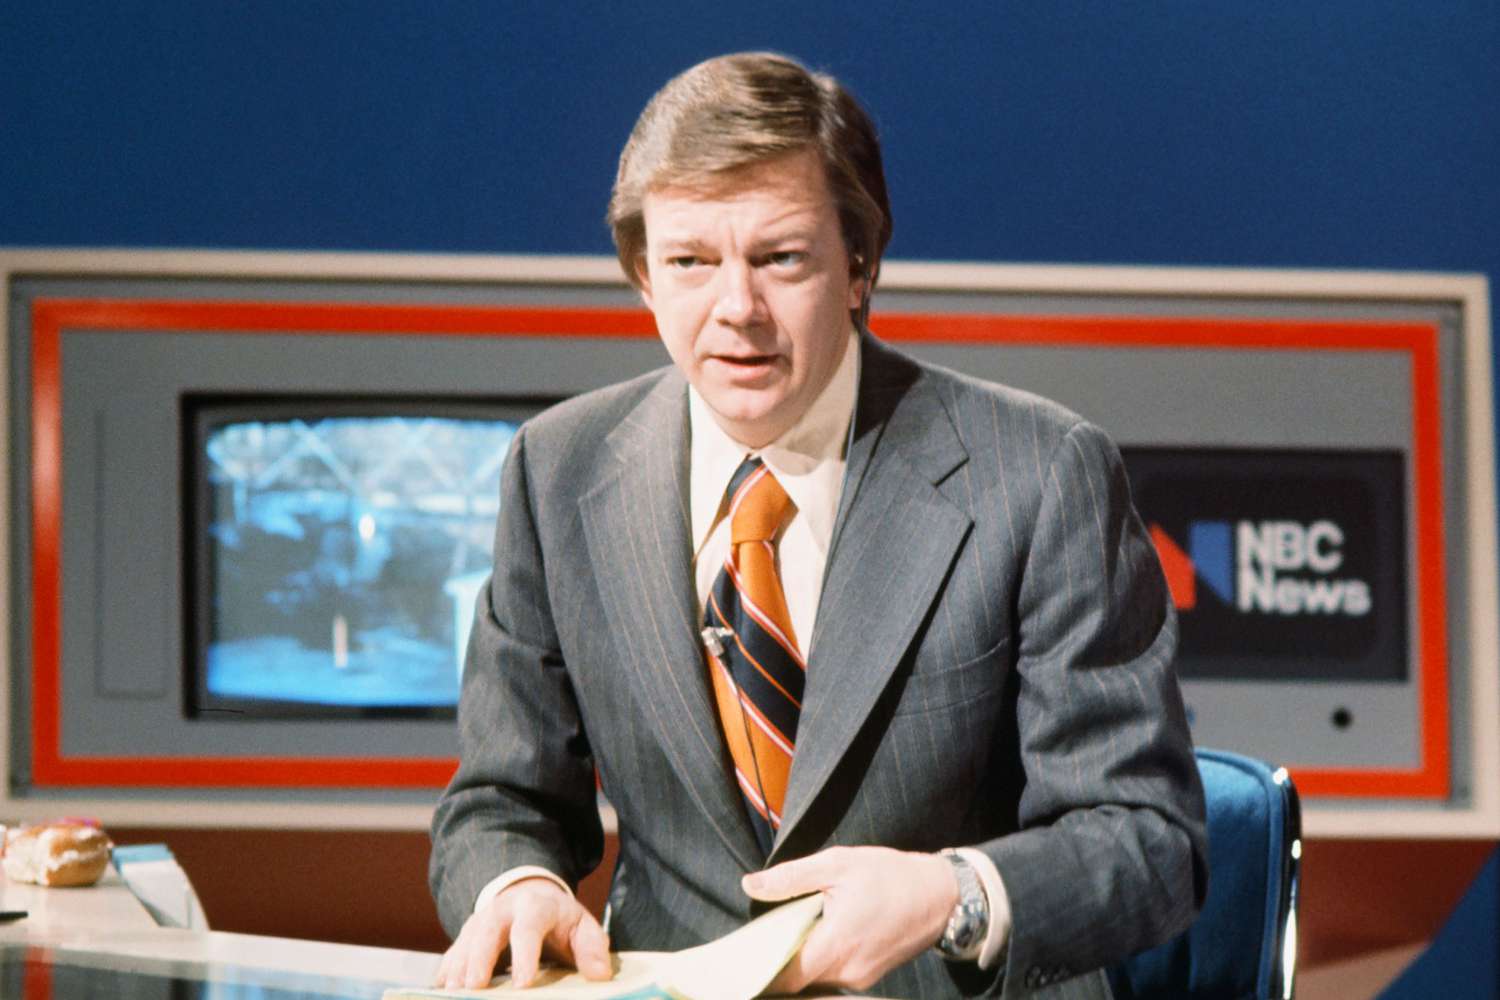 NBC News' Jim Hartz during the 1976 New Hampshire Democractic Primary on February 24, 1976